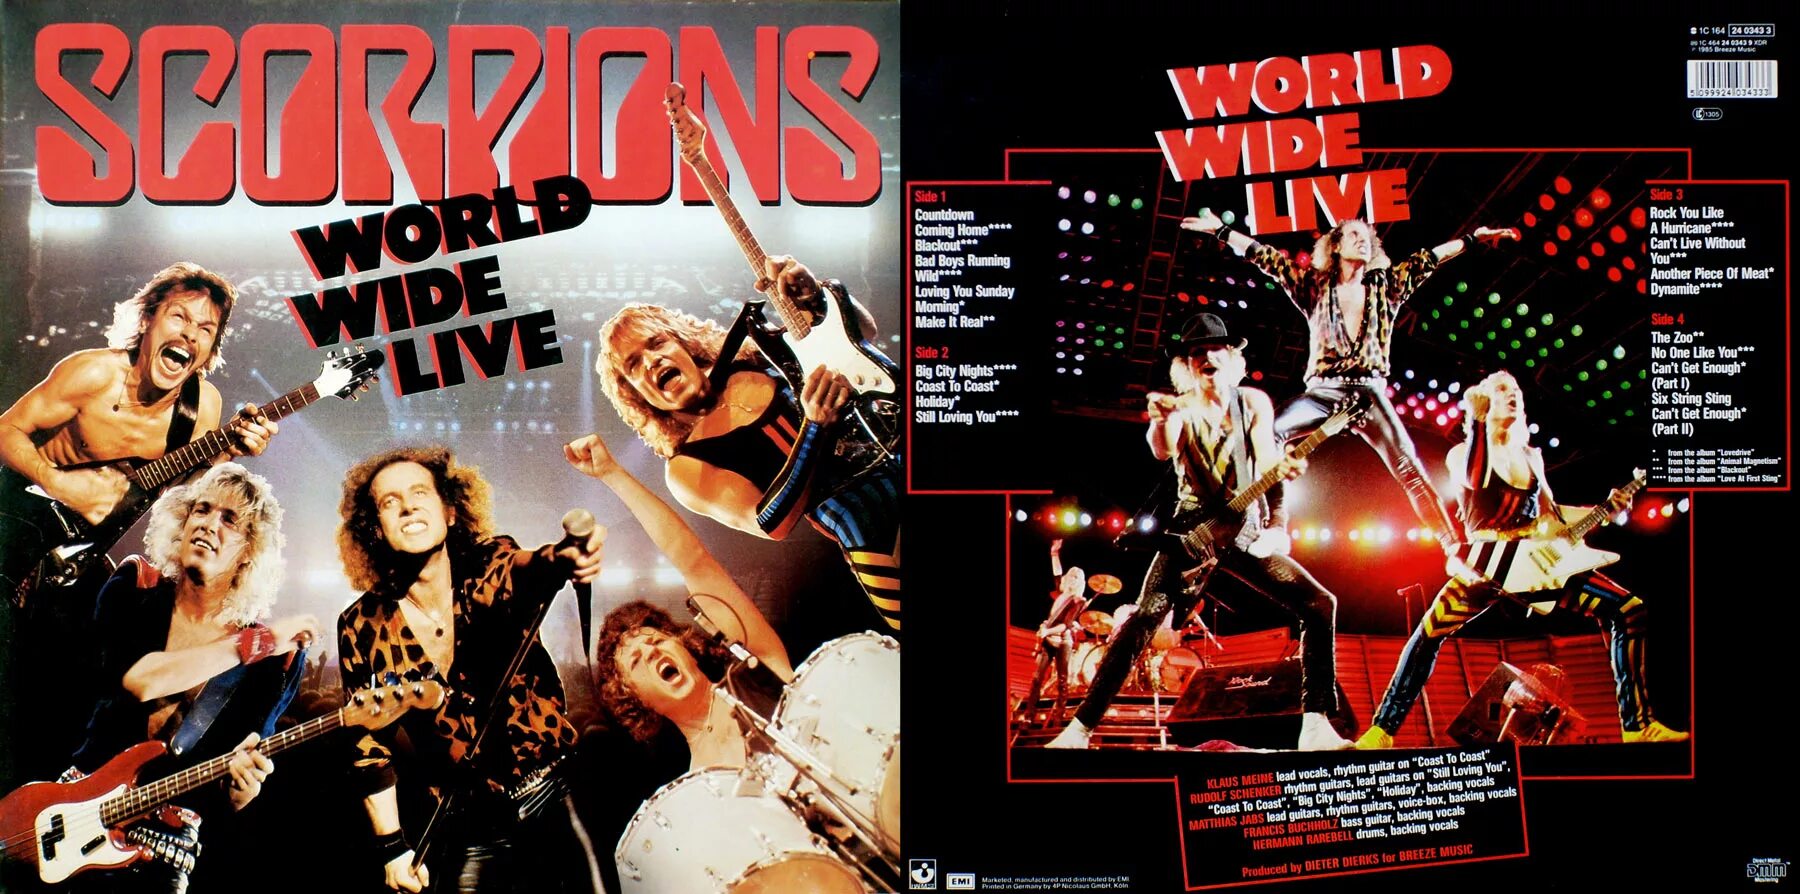 Scorpions 1985 World wide Live Live. Группа Scorpions 1985. Группа Scorpions 1986. Scorpions 1985 обложка.